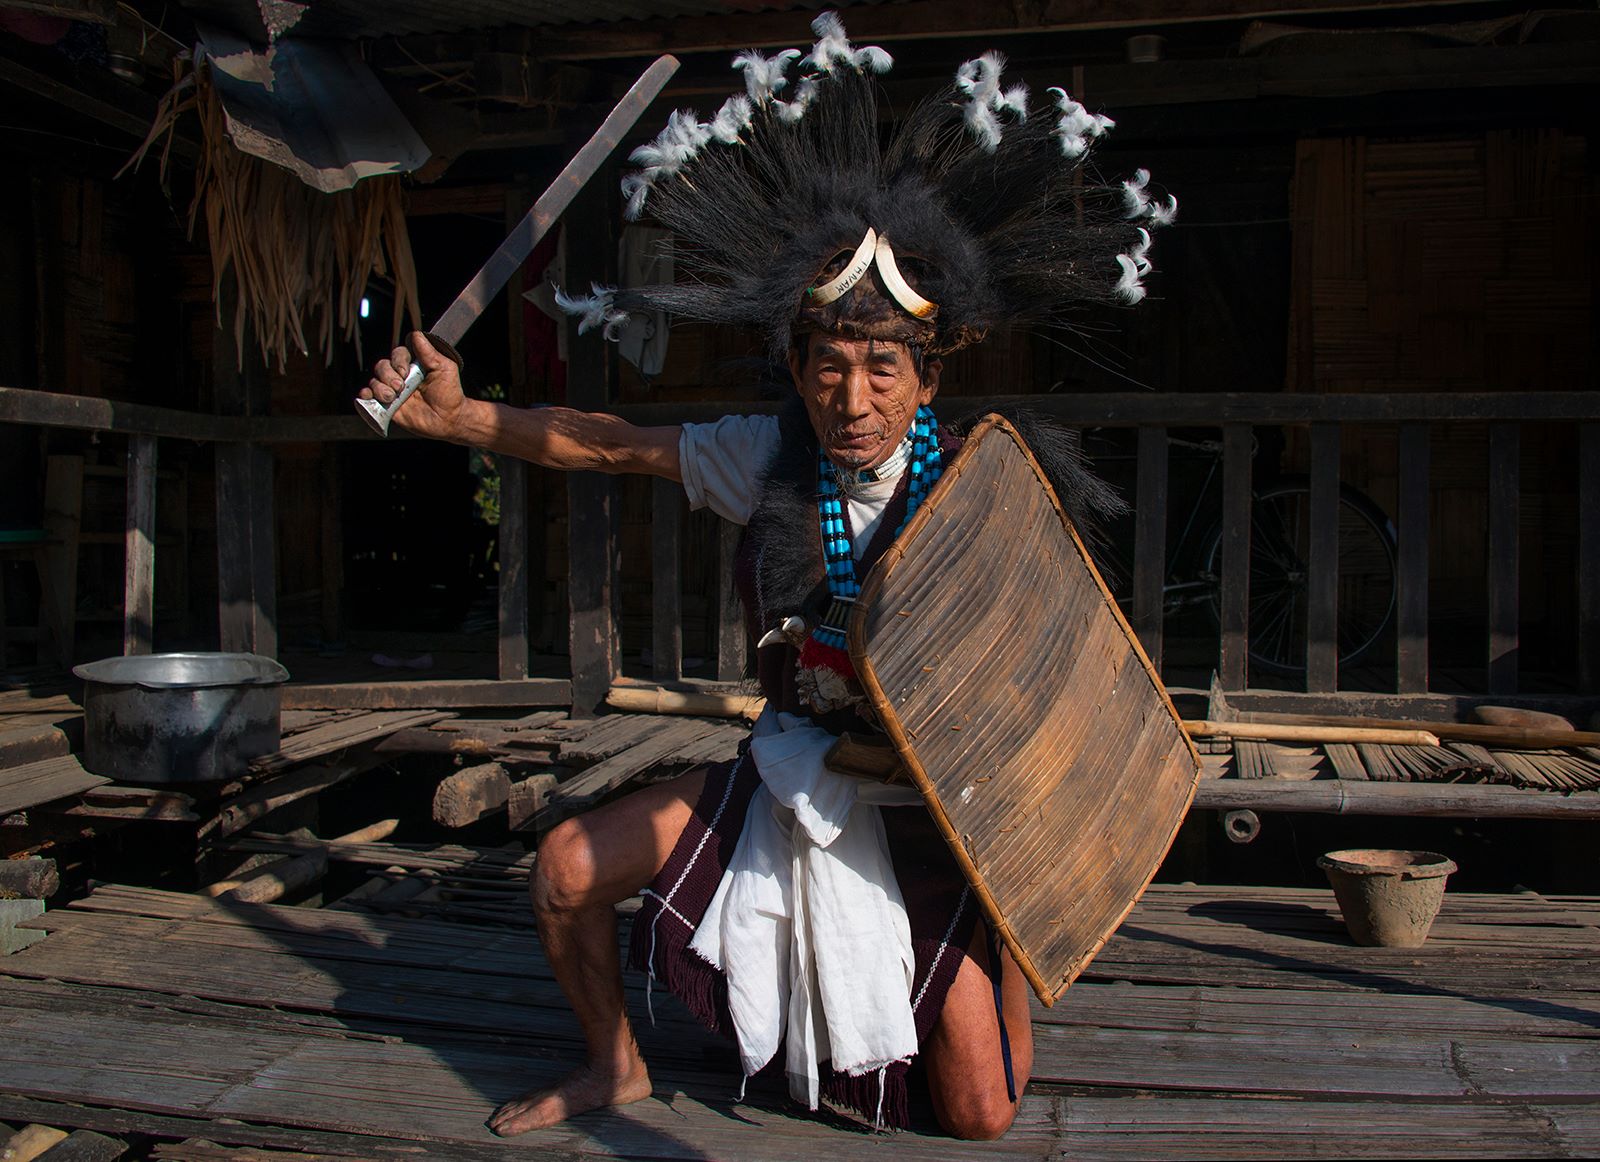 Adi Tribe Warrior in Arunachal Pradesh